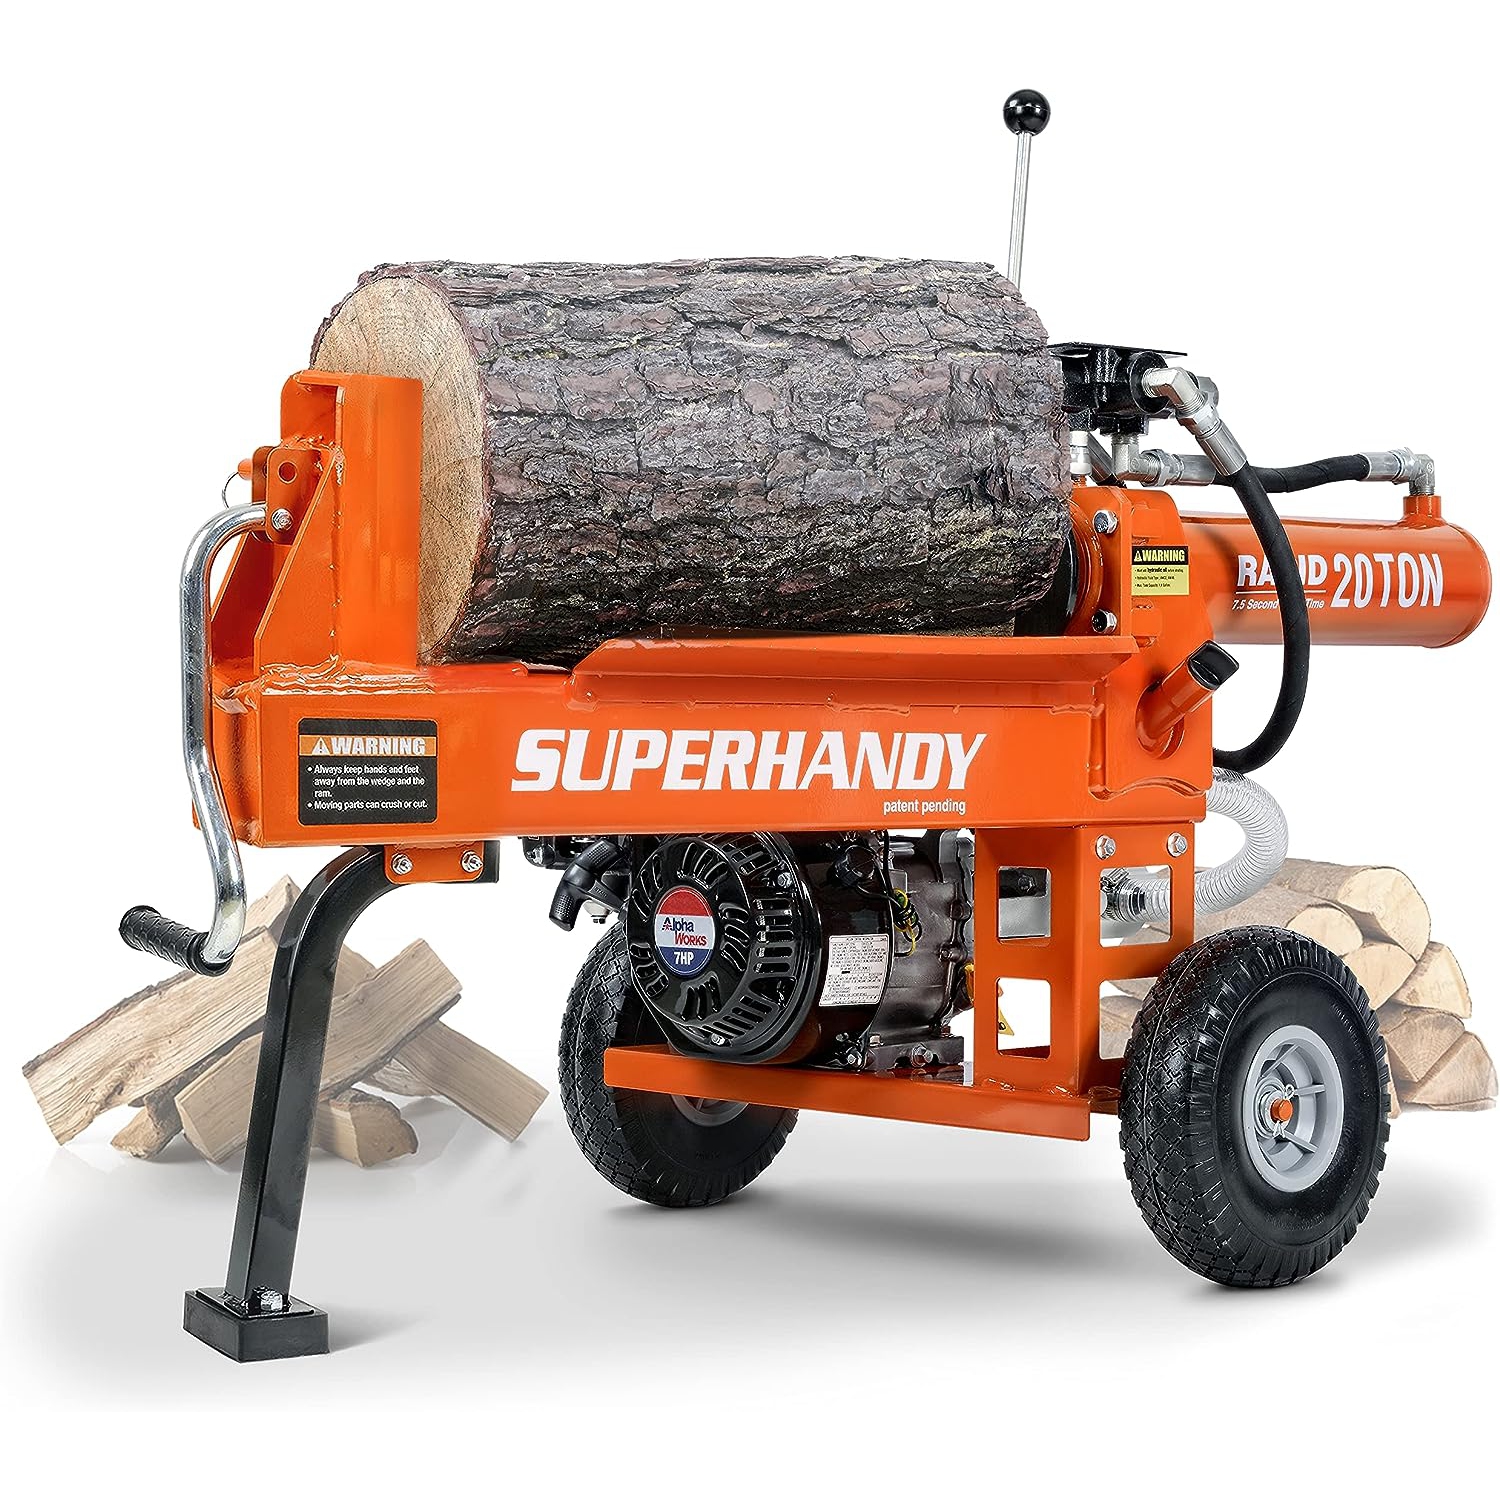 SuperHandy Portable Gas Log Splitter: 20 Ton, Auto Return Ram, Bucher Gear Pump, 7HP Engine, Horizontal Steel Wedge. Ideal for Firewood & Forestry.